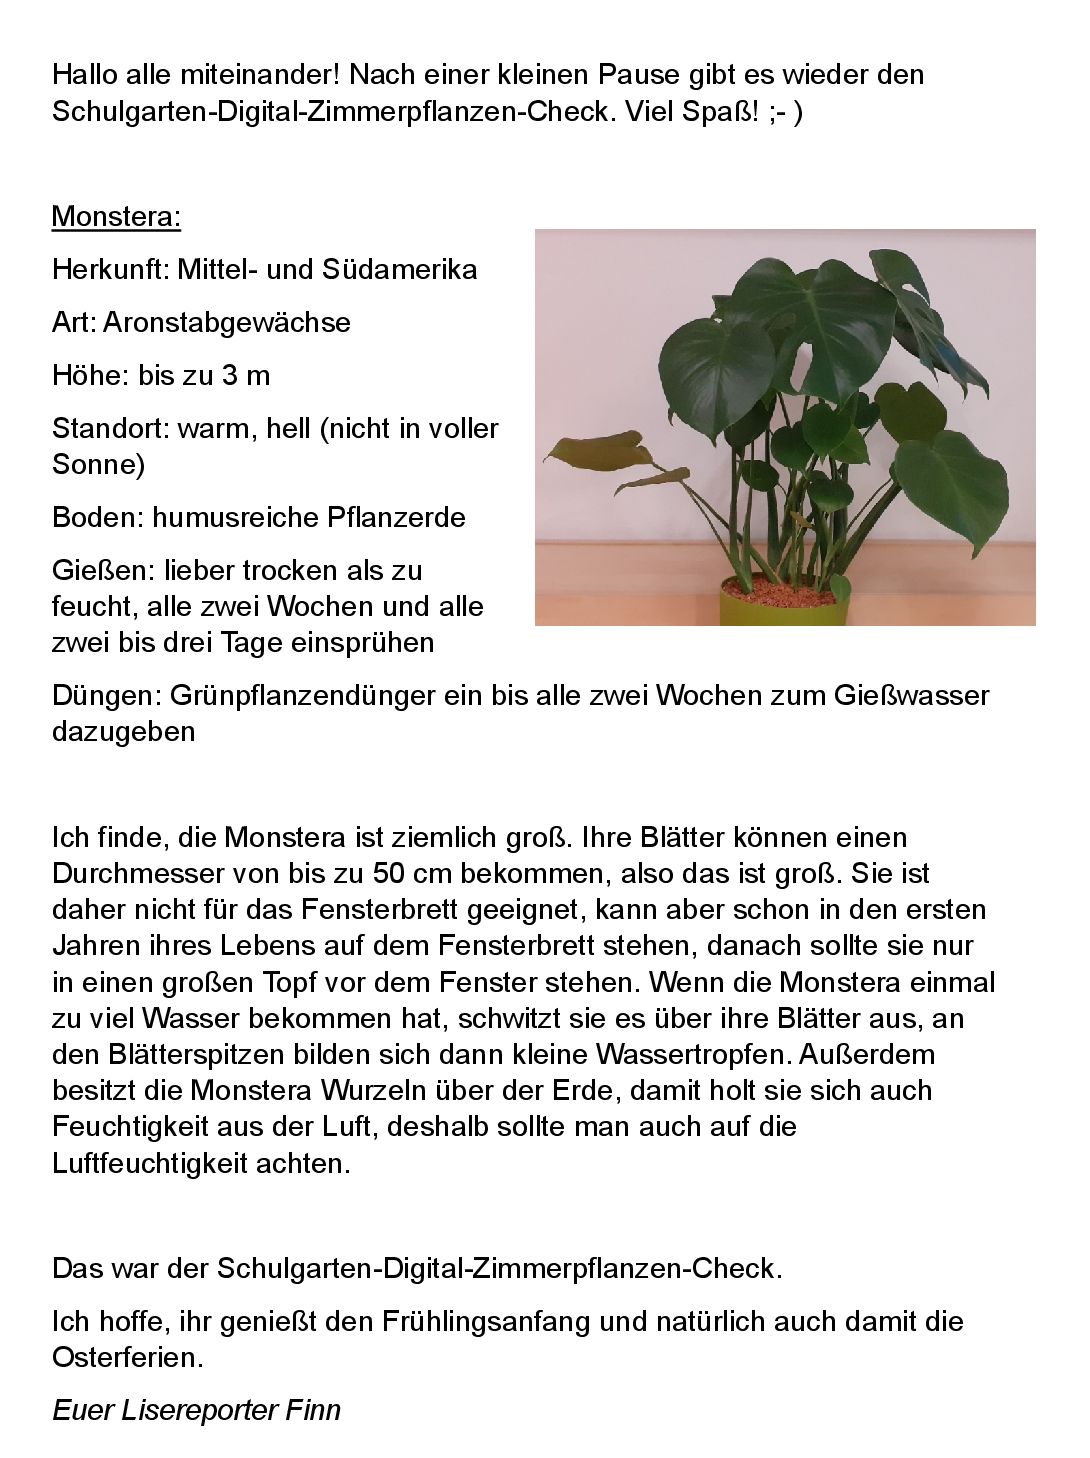 Schulgarten-Digital-Zimmerpflanzen-Check_Folge_4.png